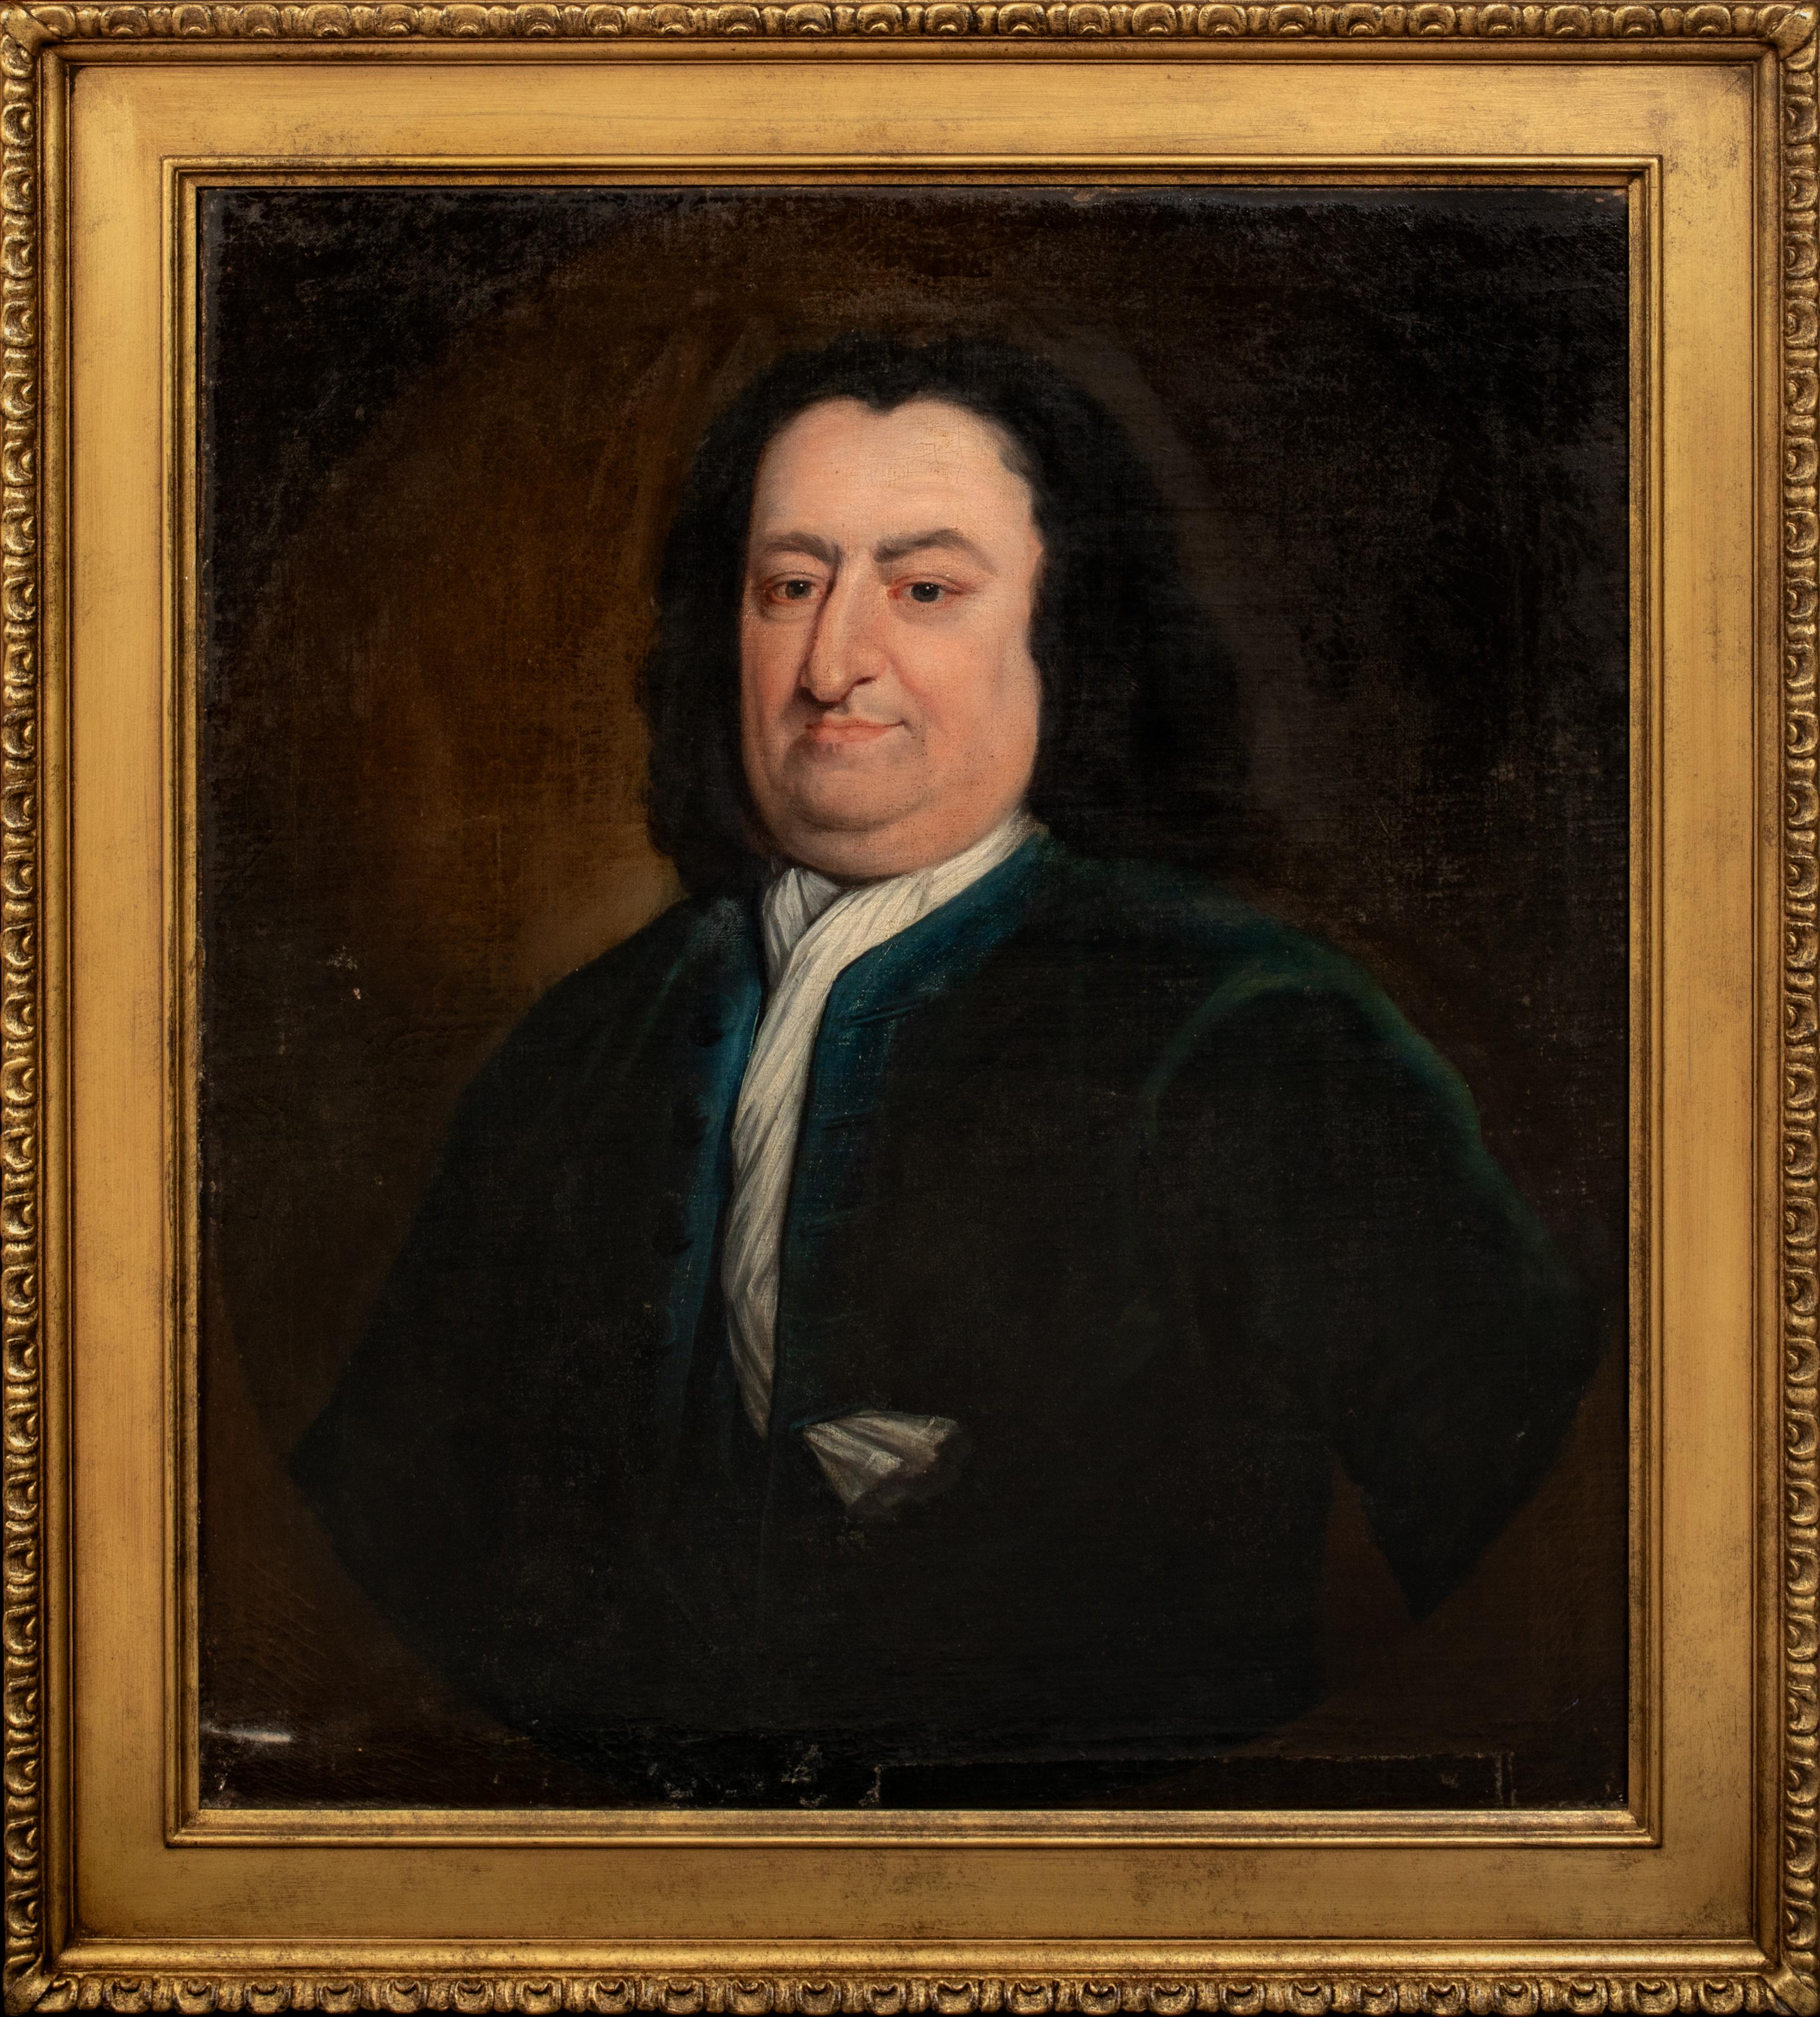 Unknown Portrait Painting - Portrait Of William Beekman Of New York, 18th Century   American School